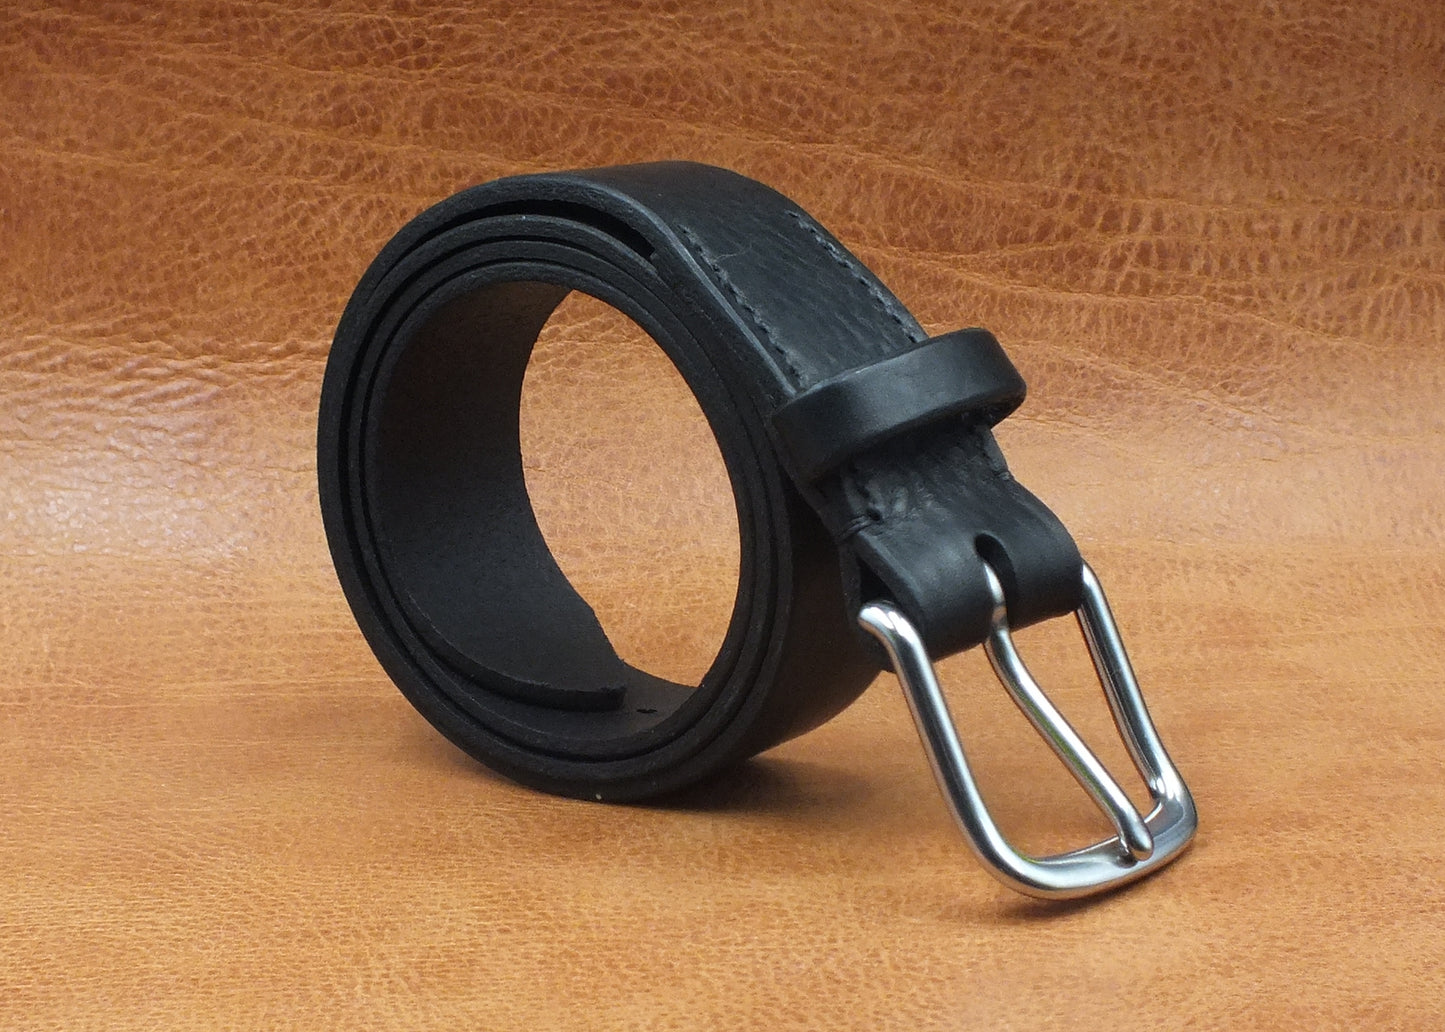 SALE - Black Leather Belt - 1.5" (38mm wide) - 32" to 36" Waist